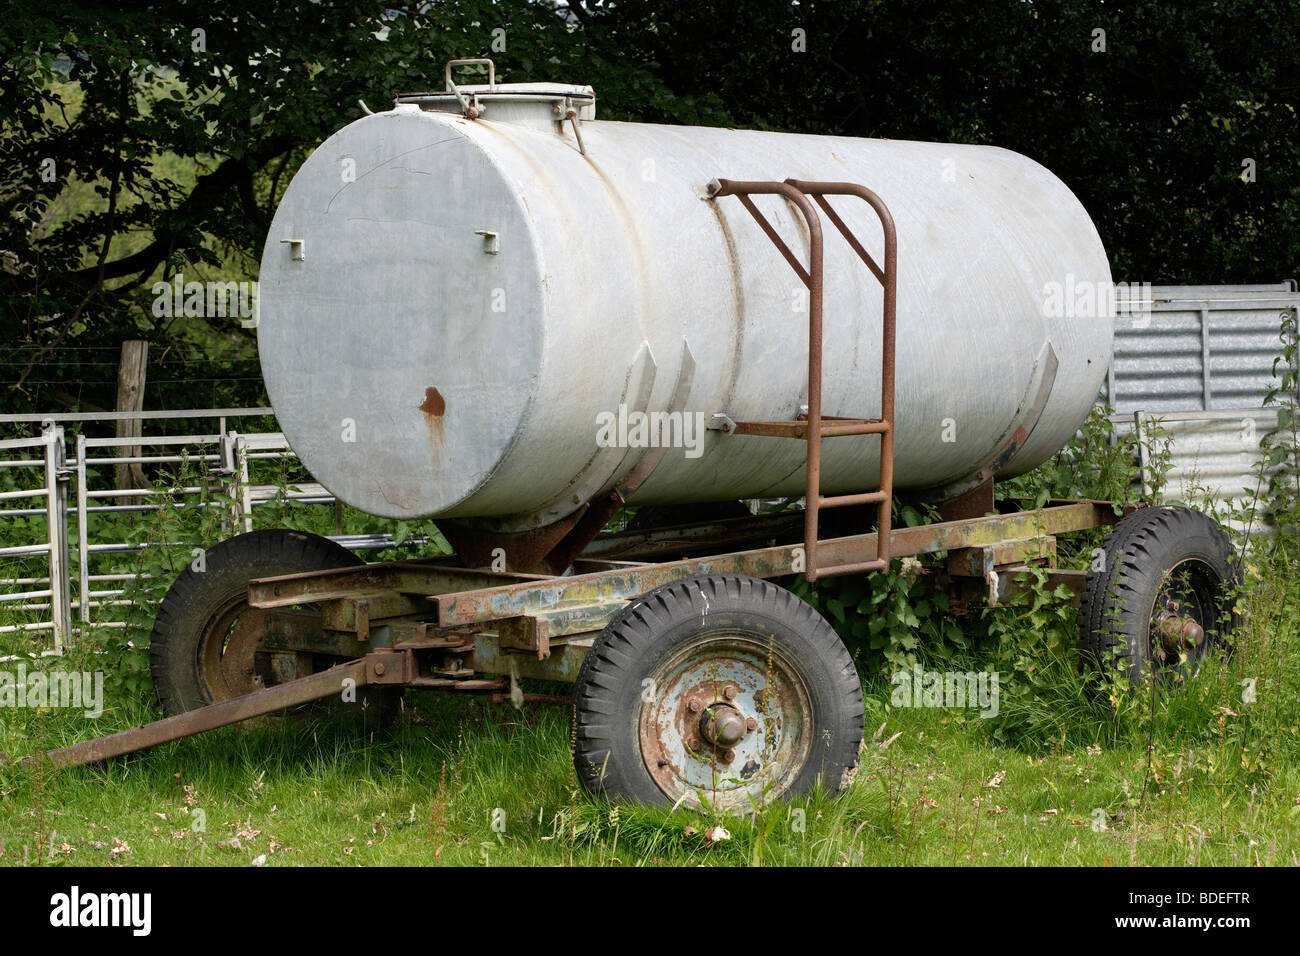 Farm water tank on trailer Stock Photo